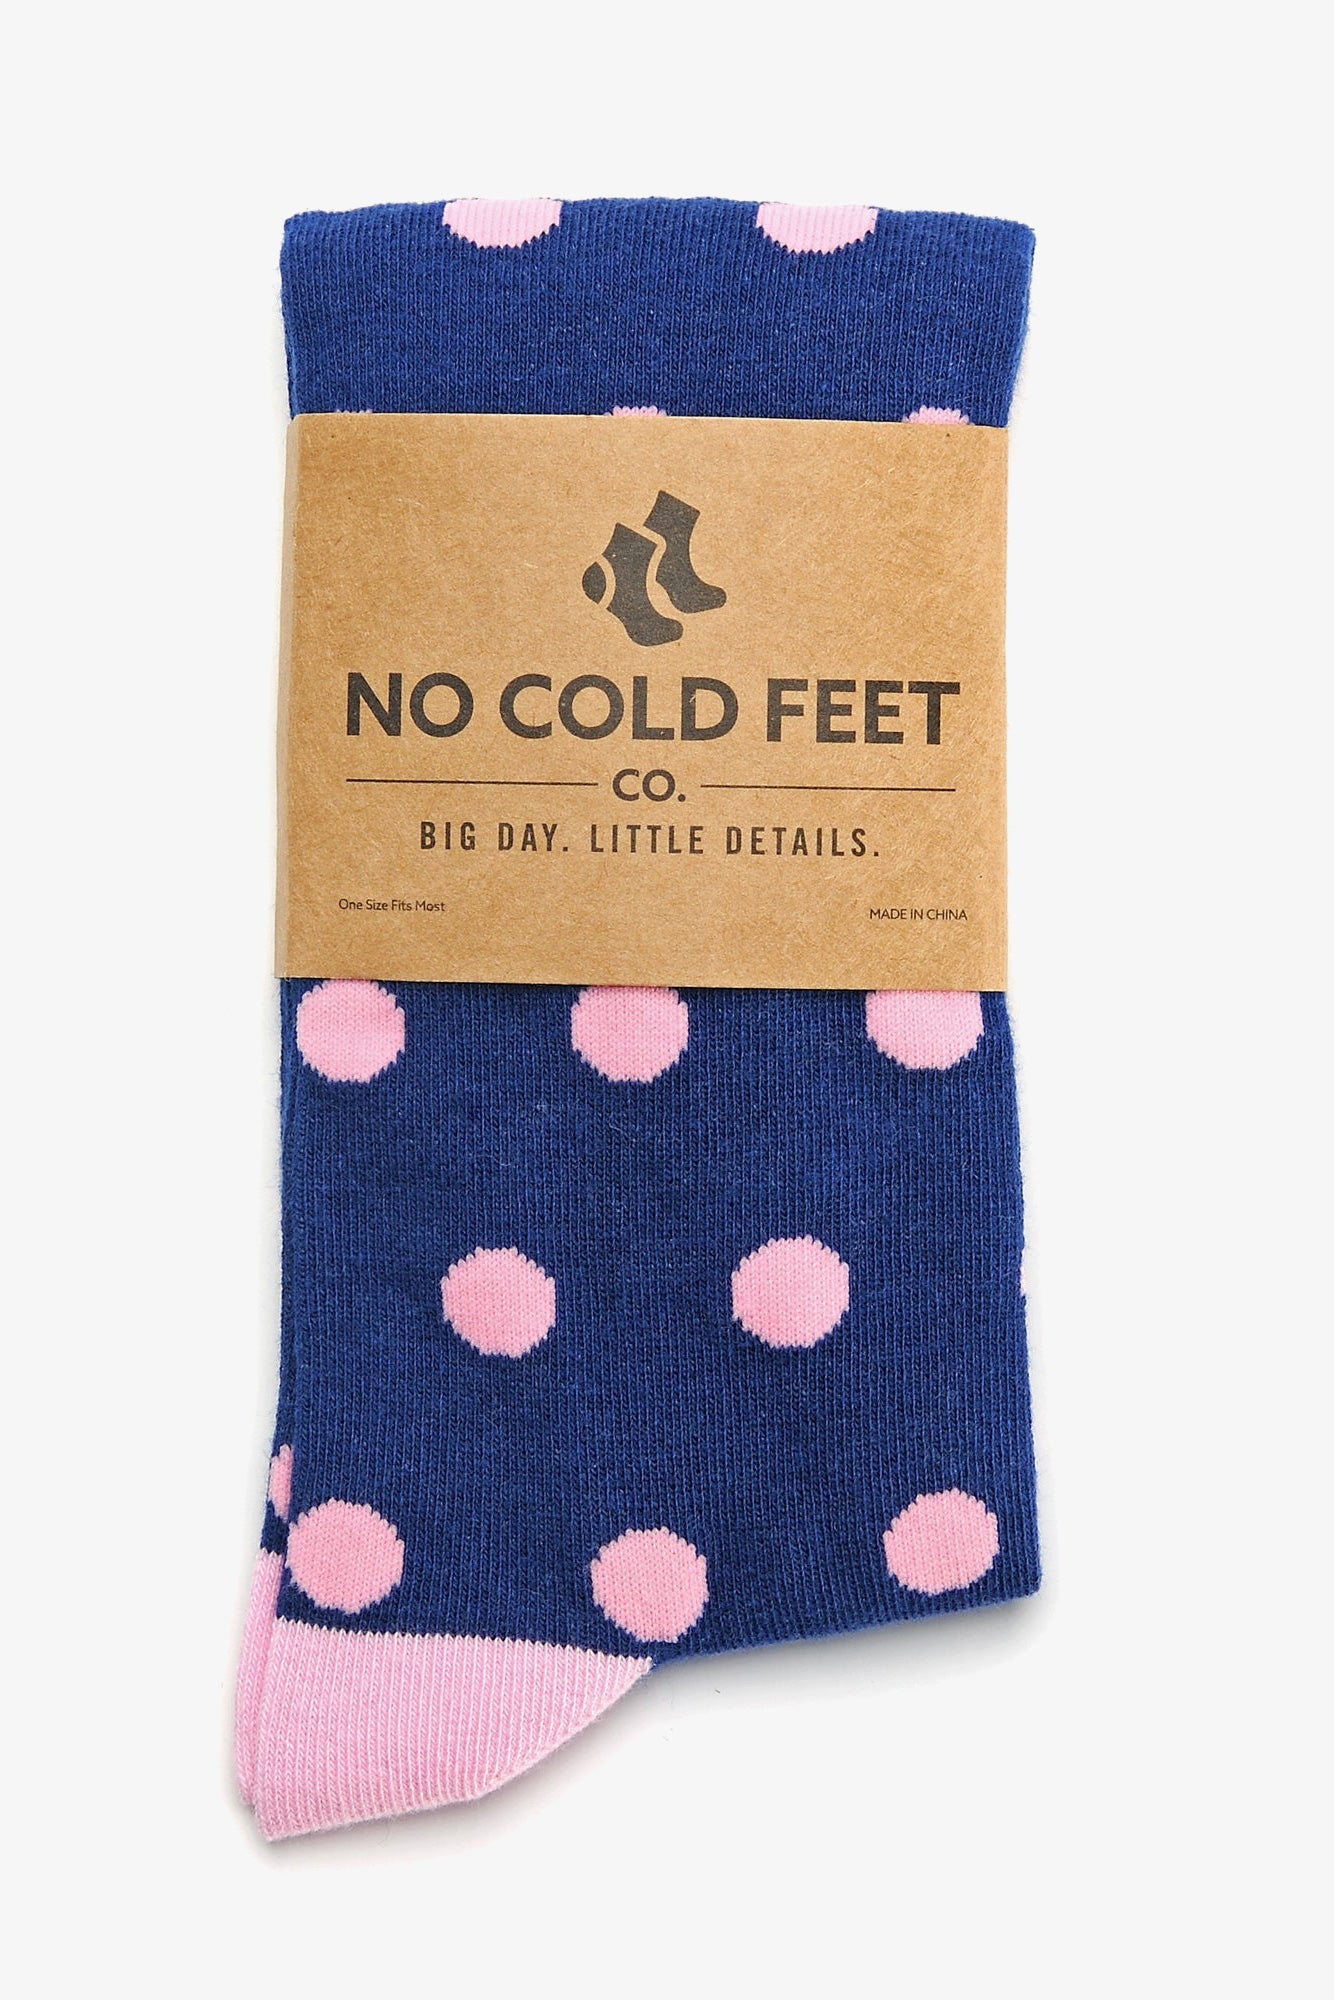 Polka Dot Groomsmen Socks By No Cold Feet - Navy